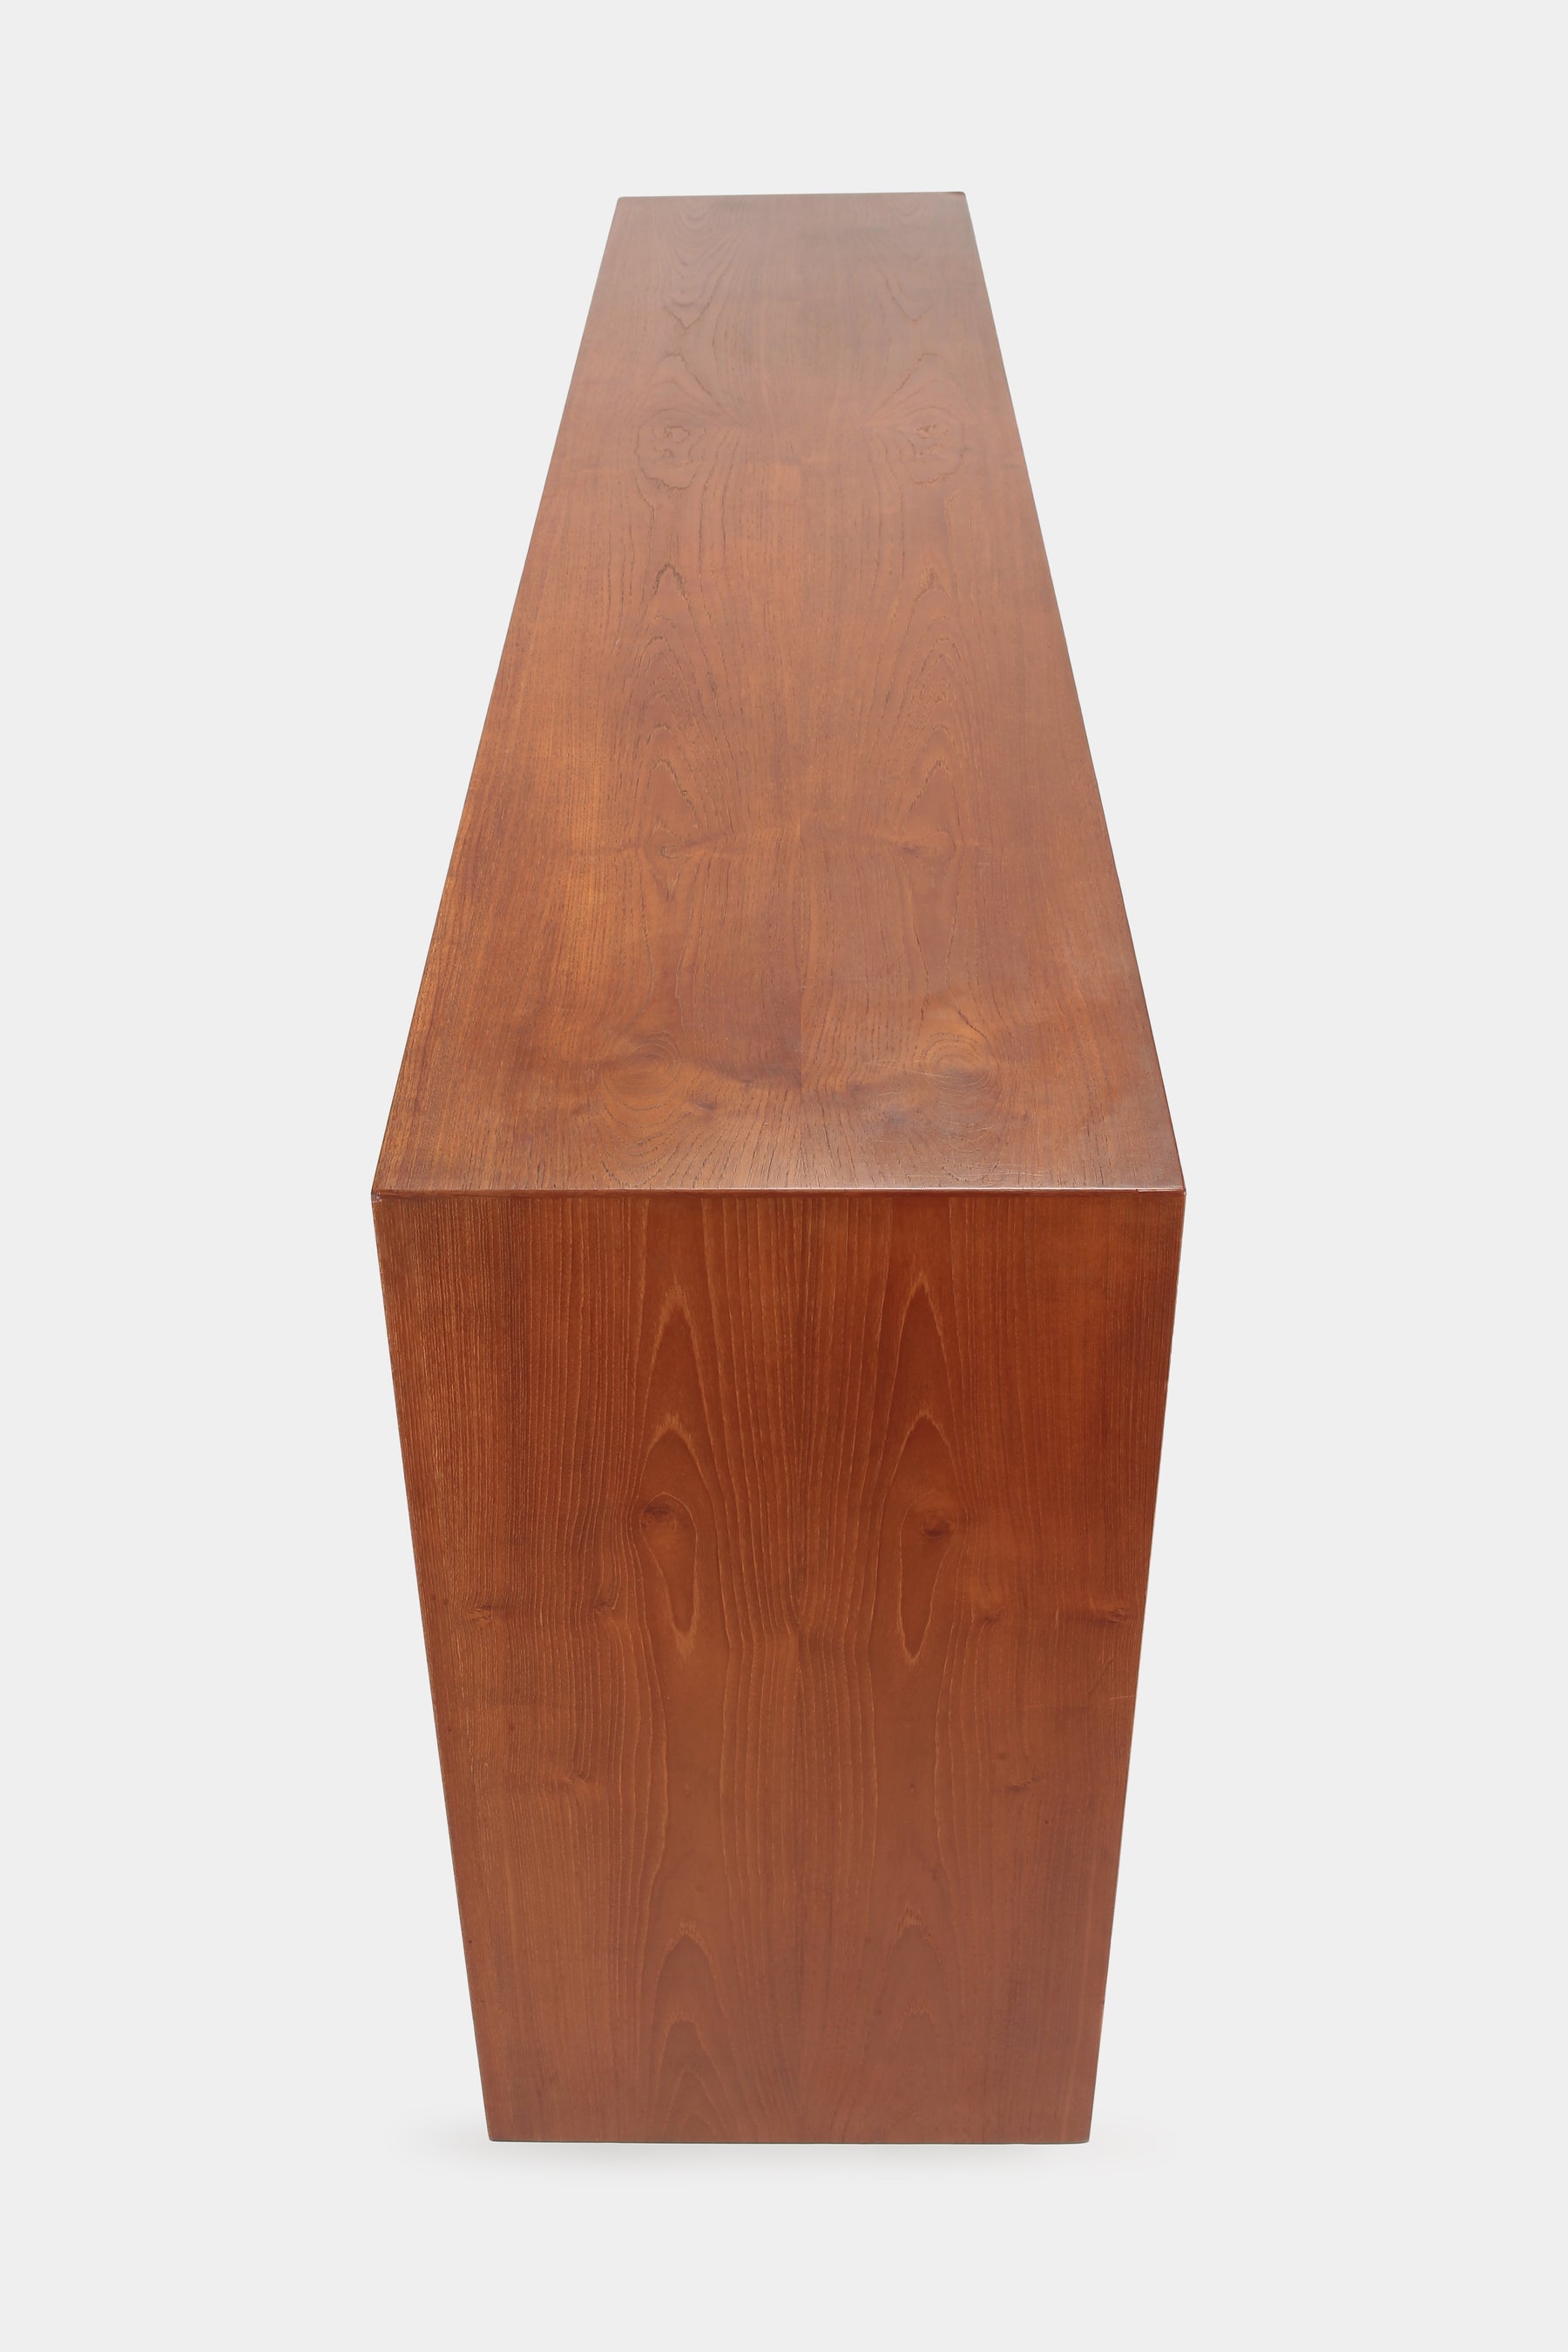 Arne Vodder Teak Highboard Sibast Furniture Denmark 60's